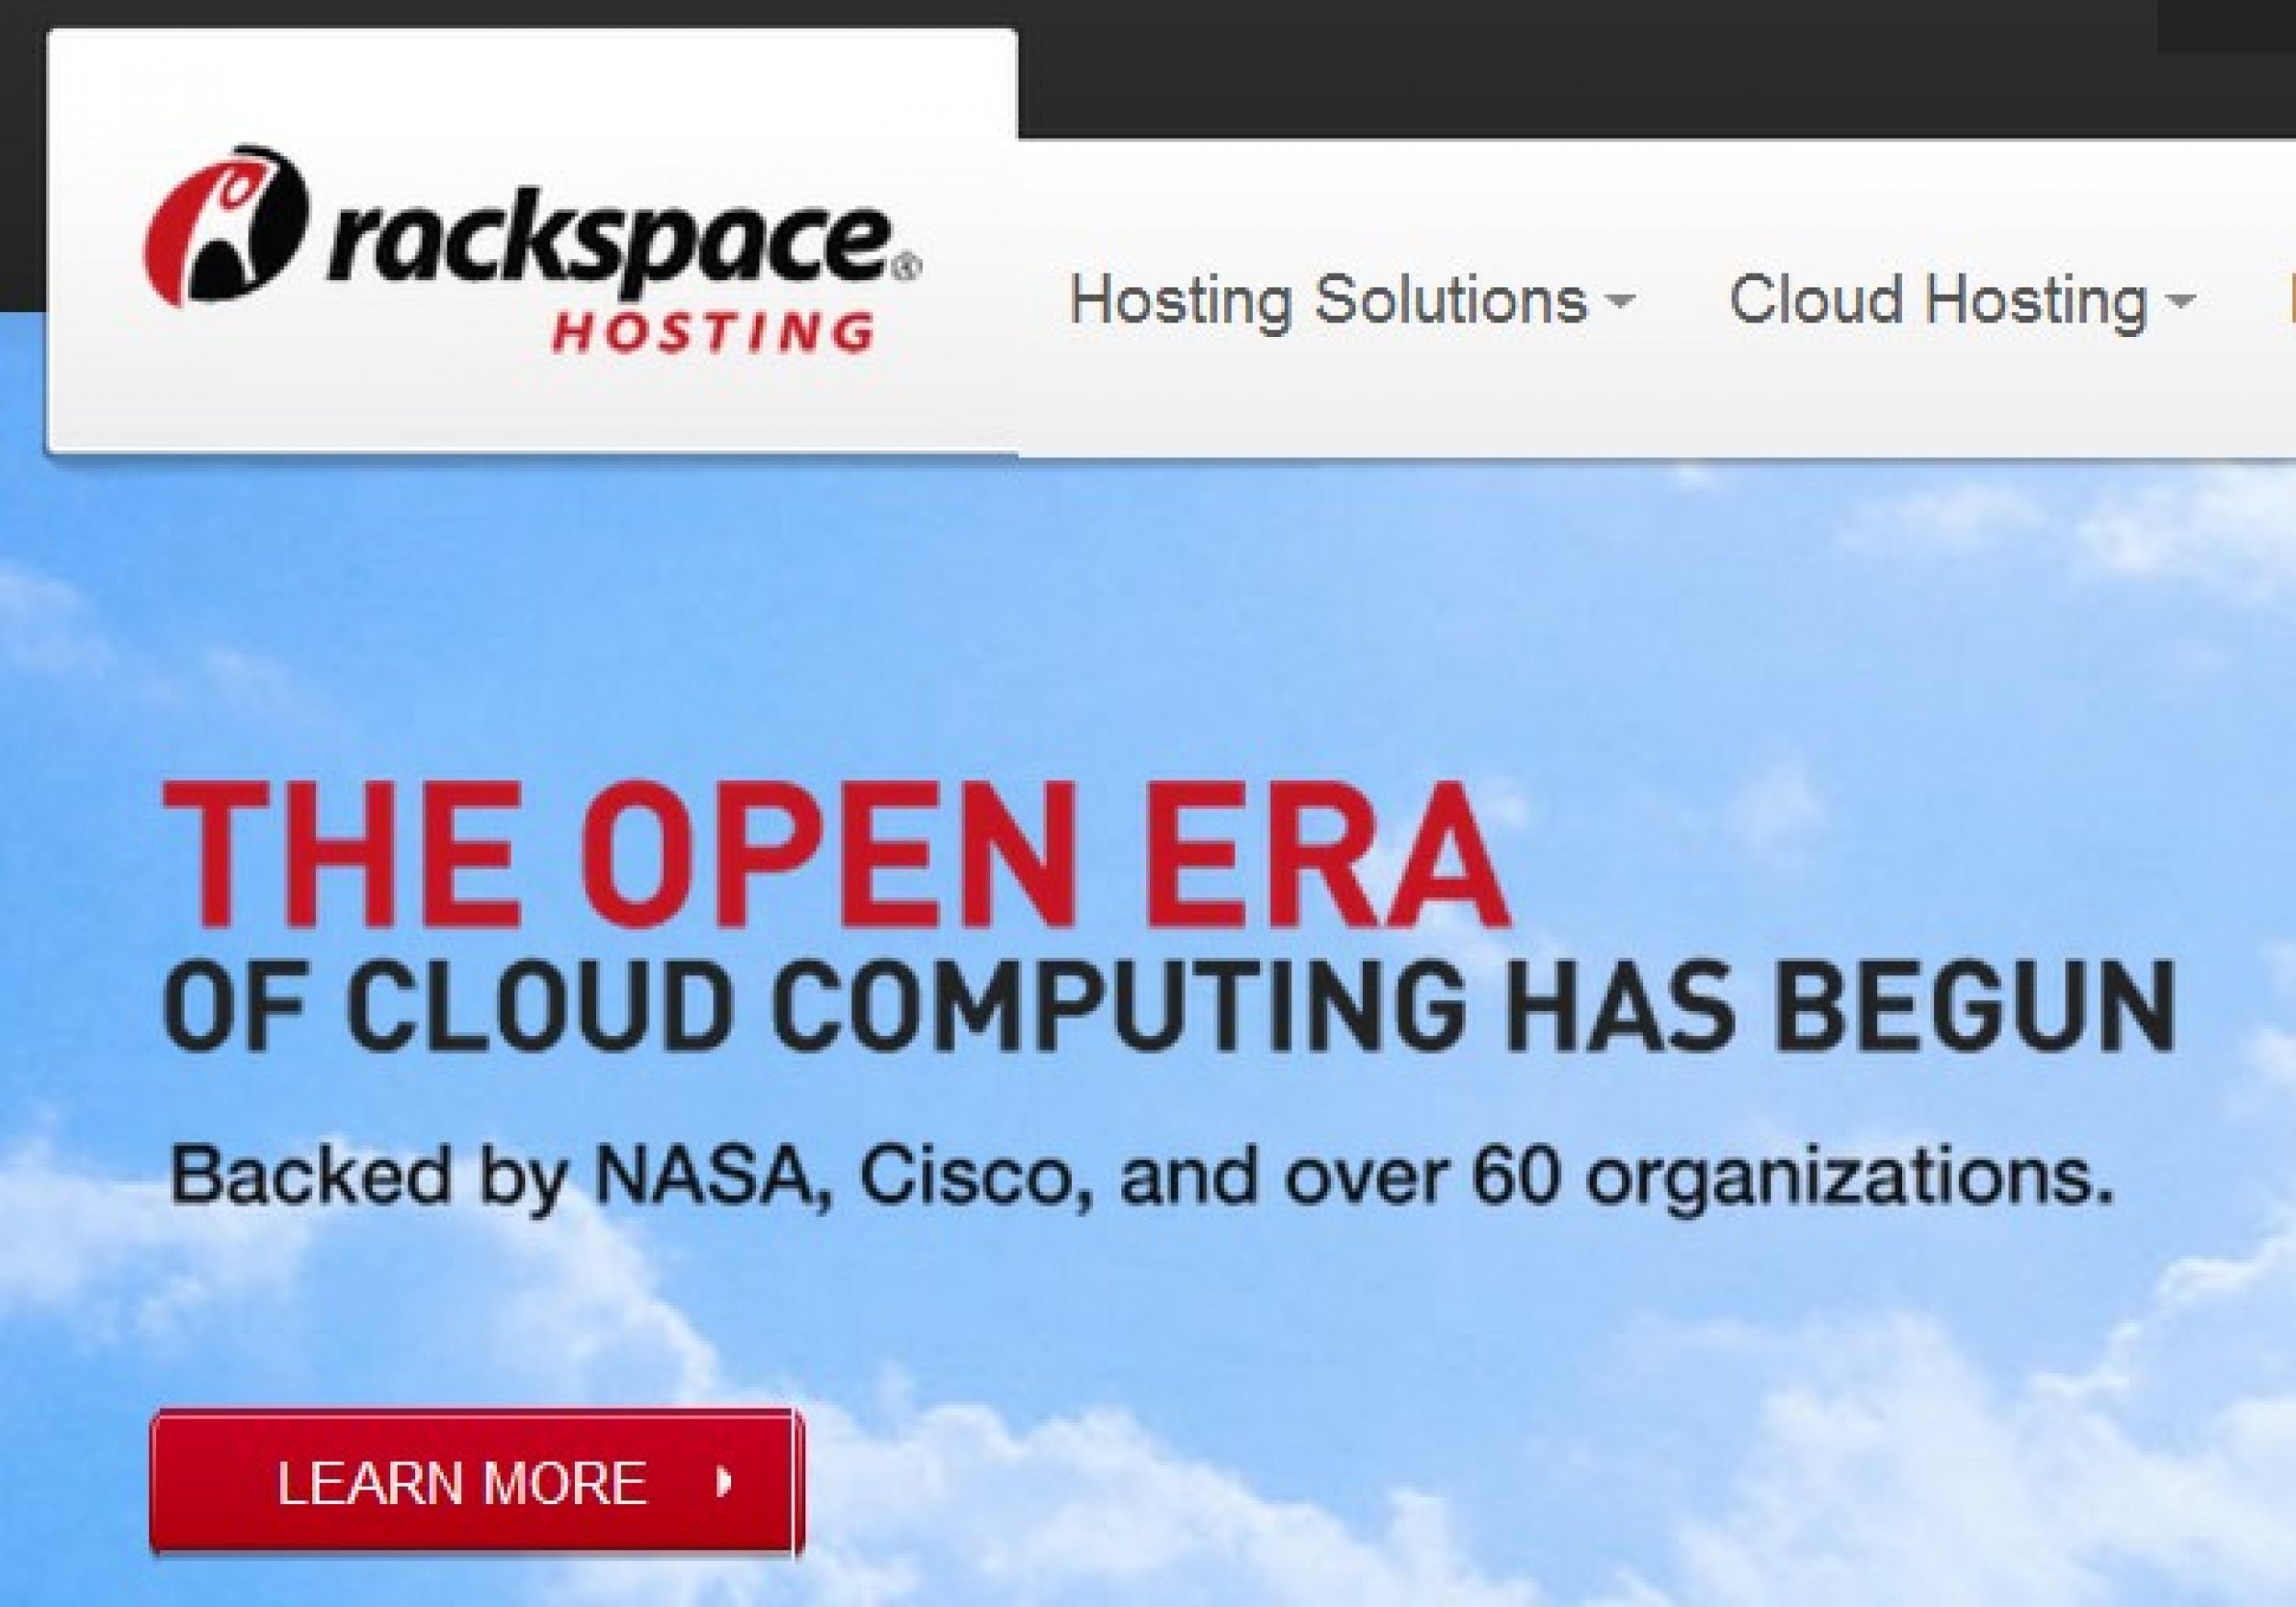 Rackspace Web site